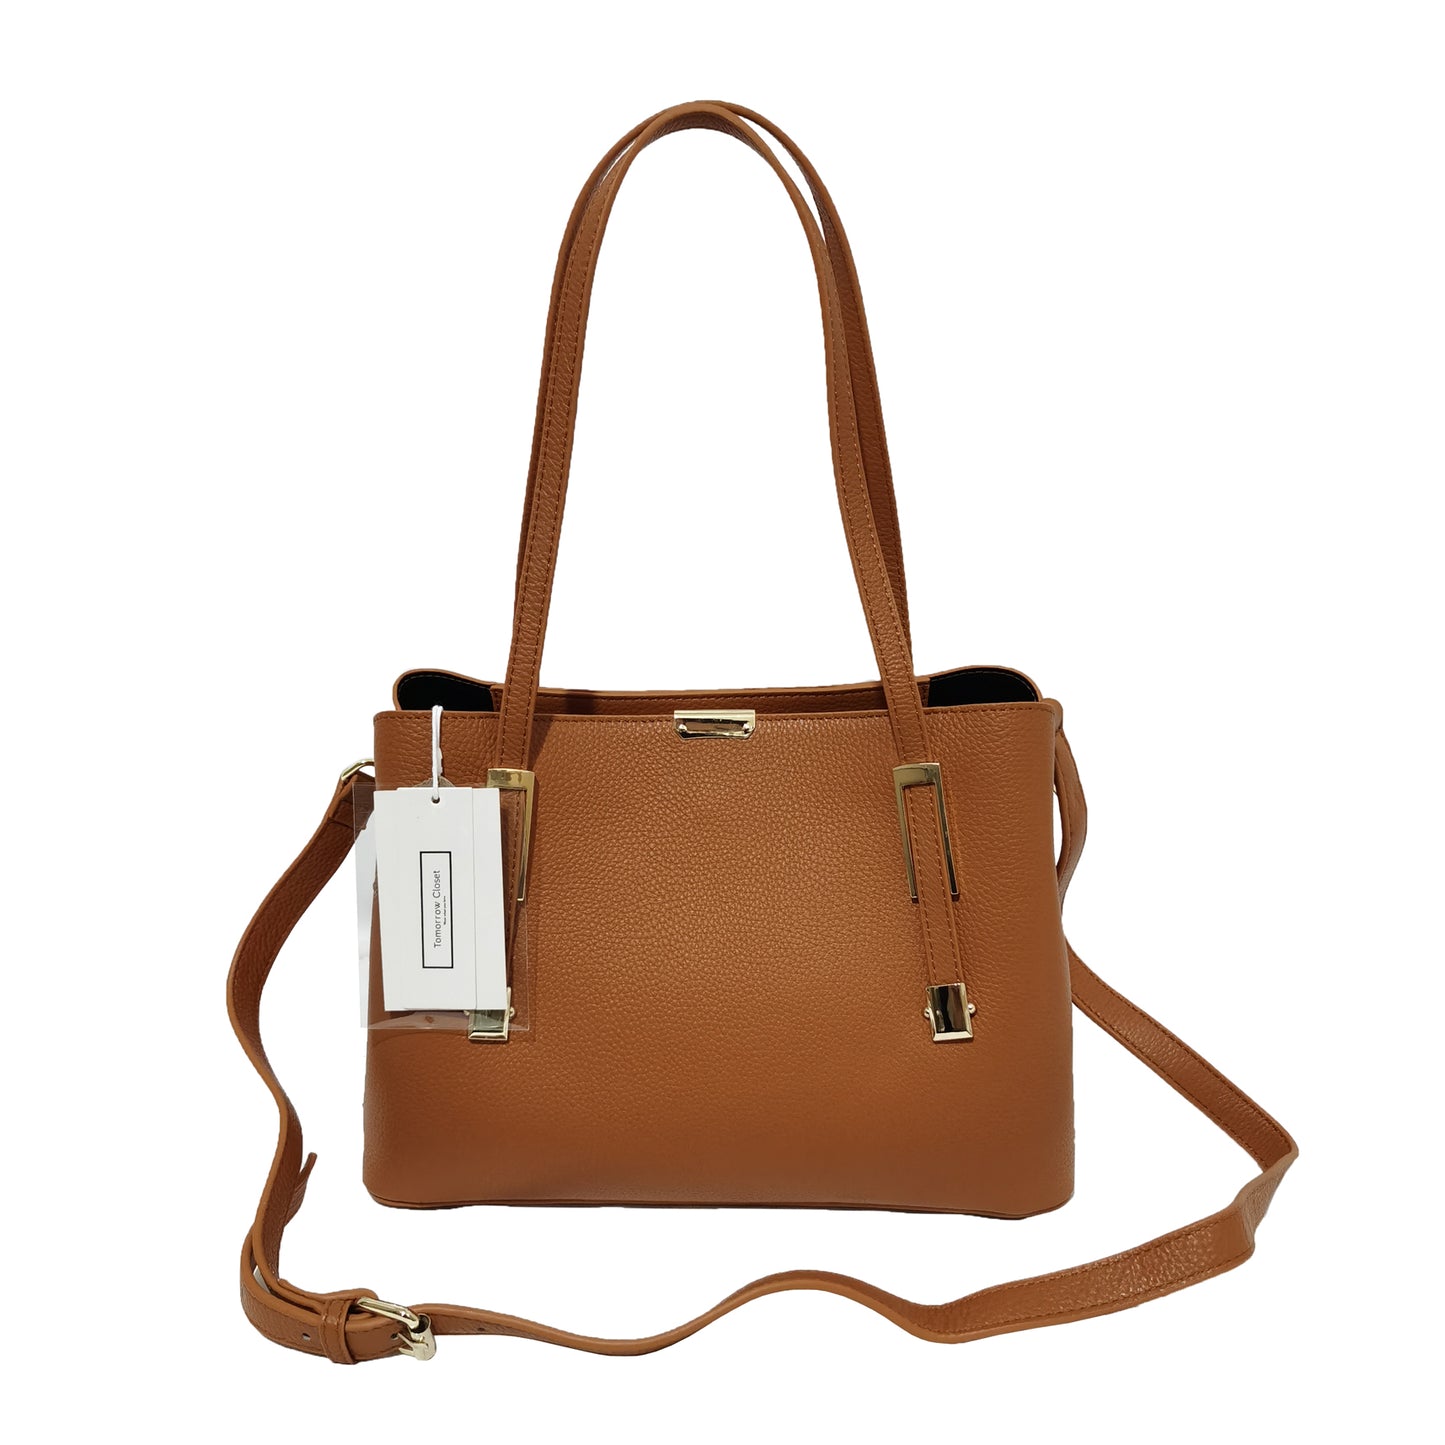 Women's cowhide leather handbag Mori design by Tomorrow Closet